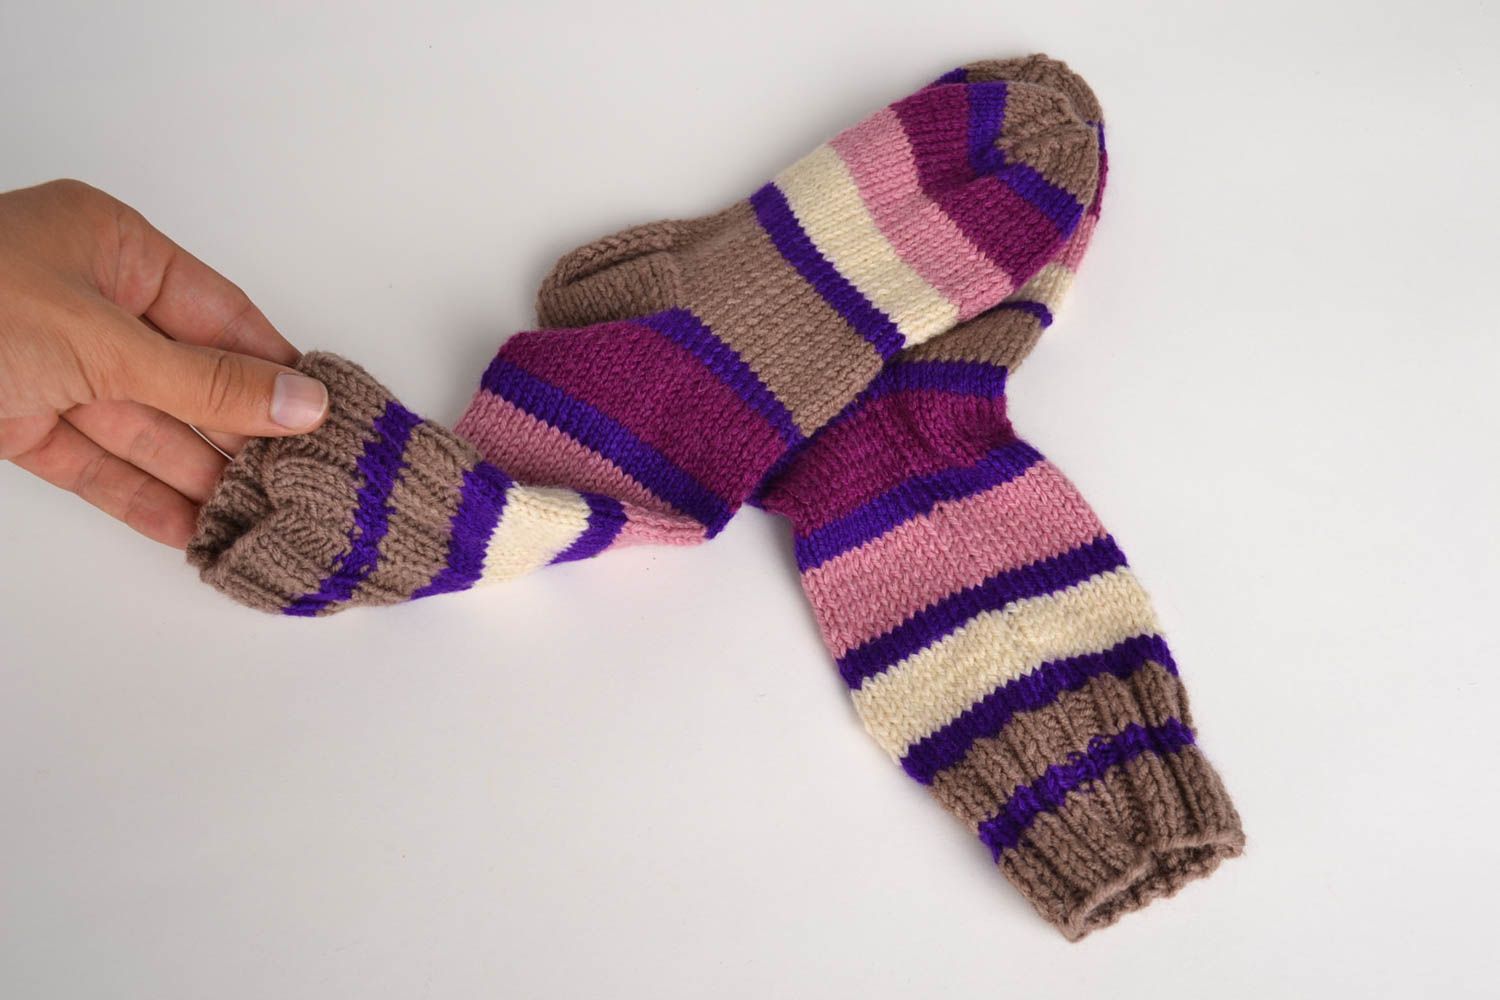 Beautiful handmade knitted socks warm socks for women winter socks gifts for her photo 5